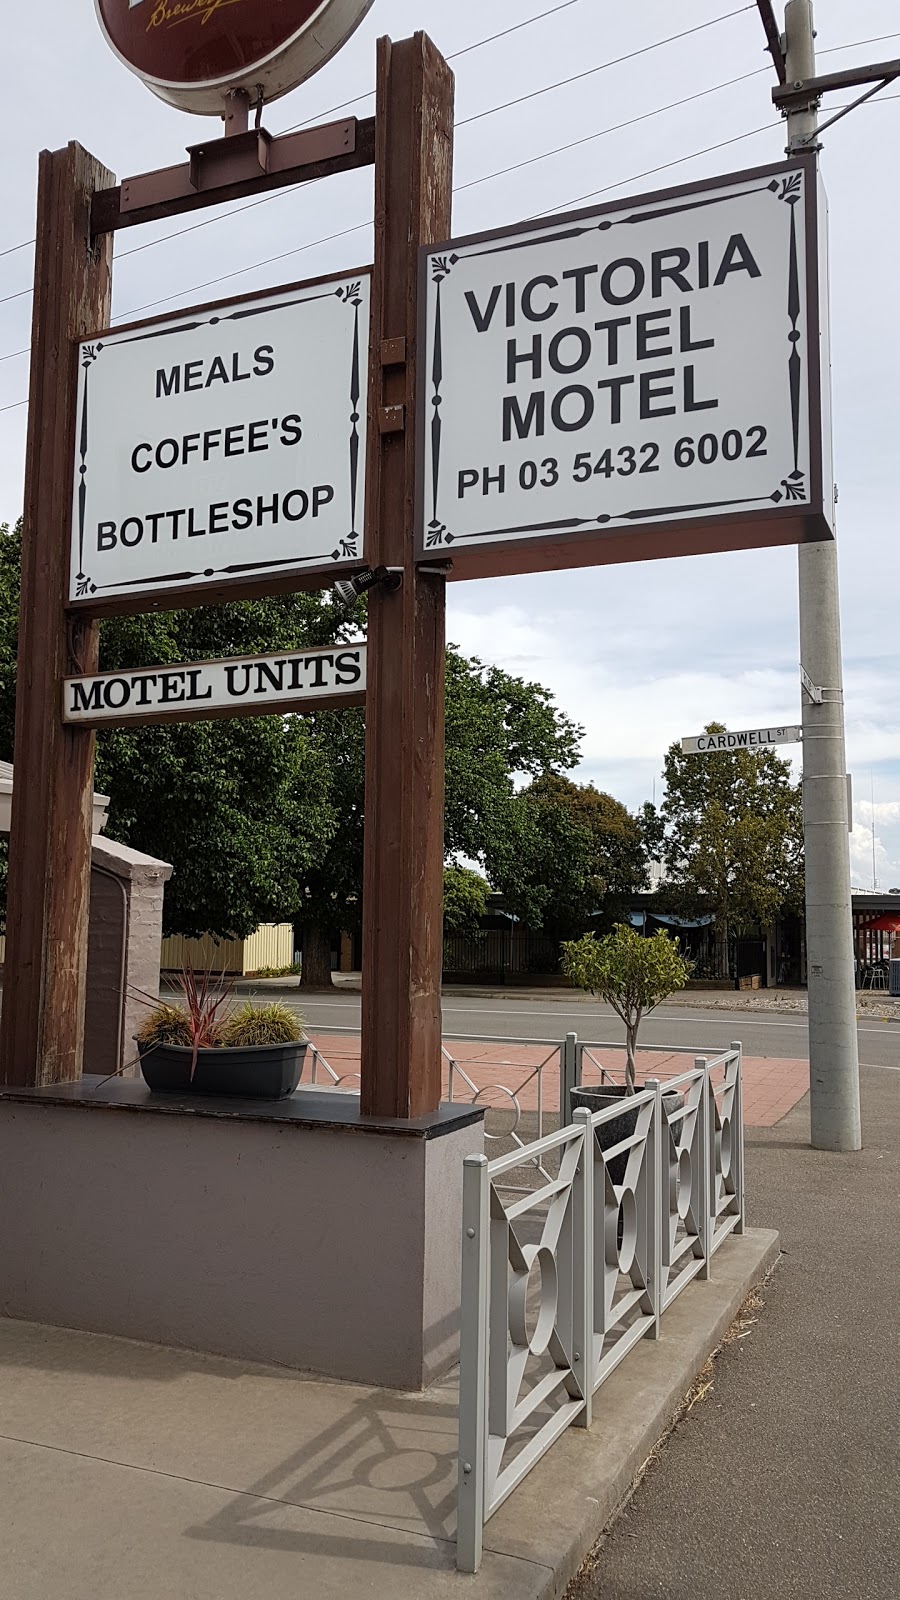 Victoria Hotel Motel | lodging | 60 Railway Place, Elmore VIC 3558, Australia | 0354326002 OR +61 3 5432 6002